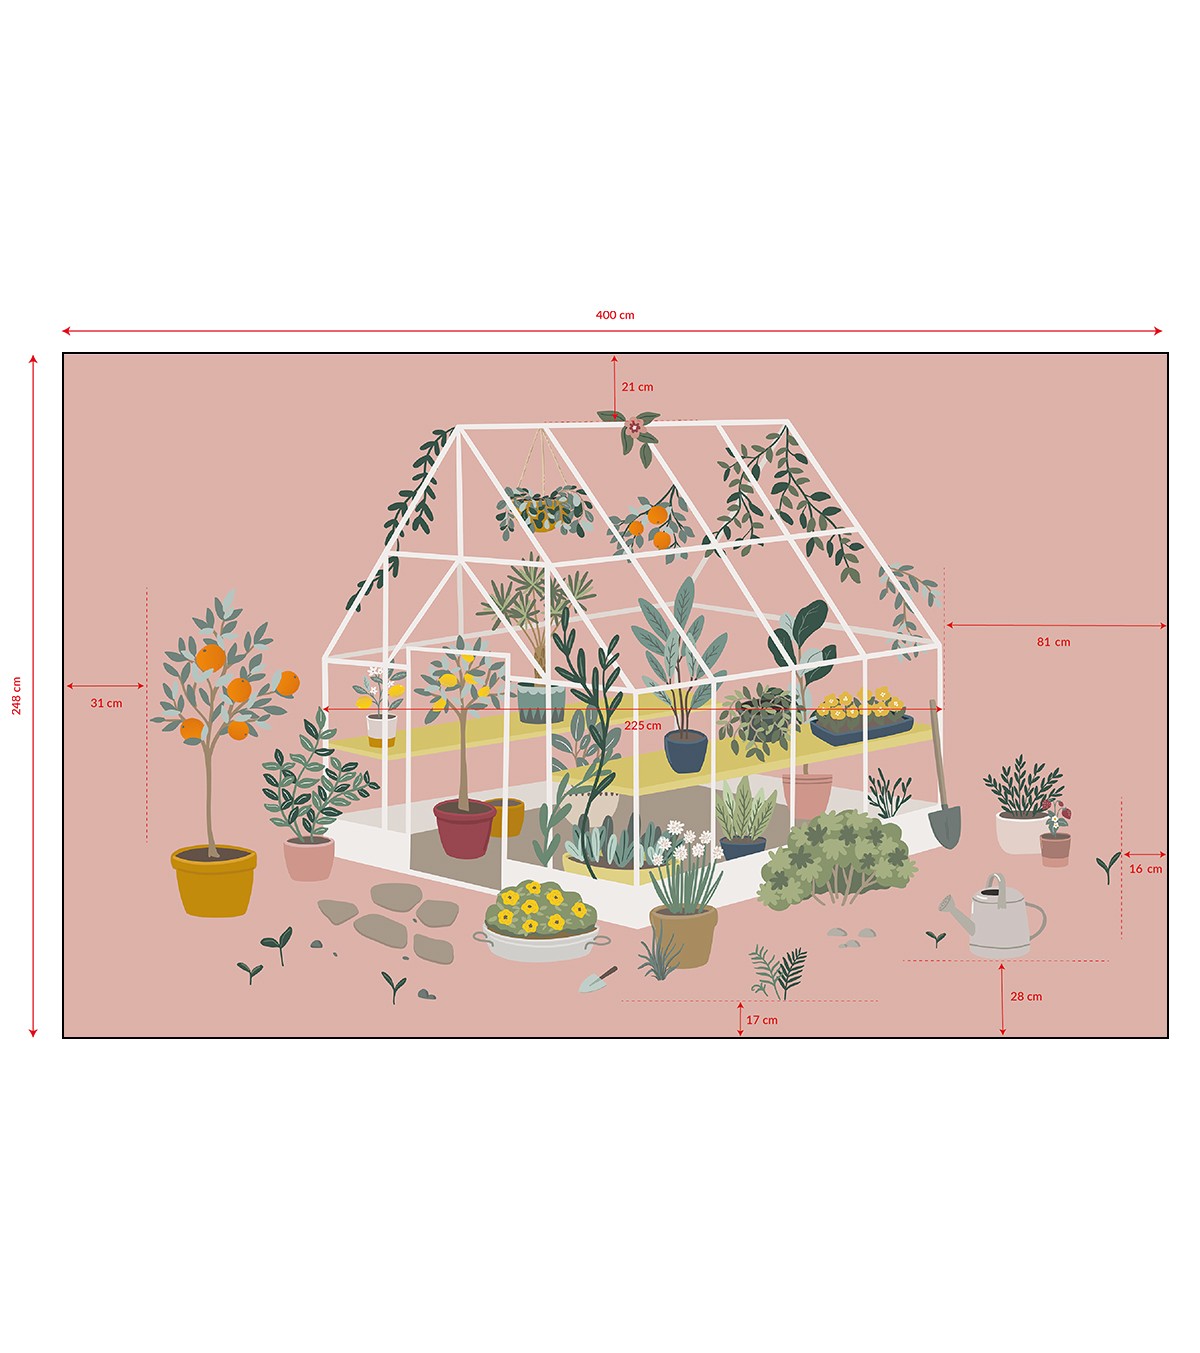 LOUISE - Panoramic wallpaper - The greenhouse, orangery